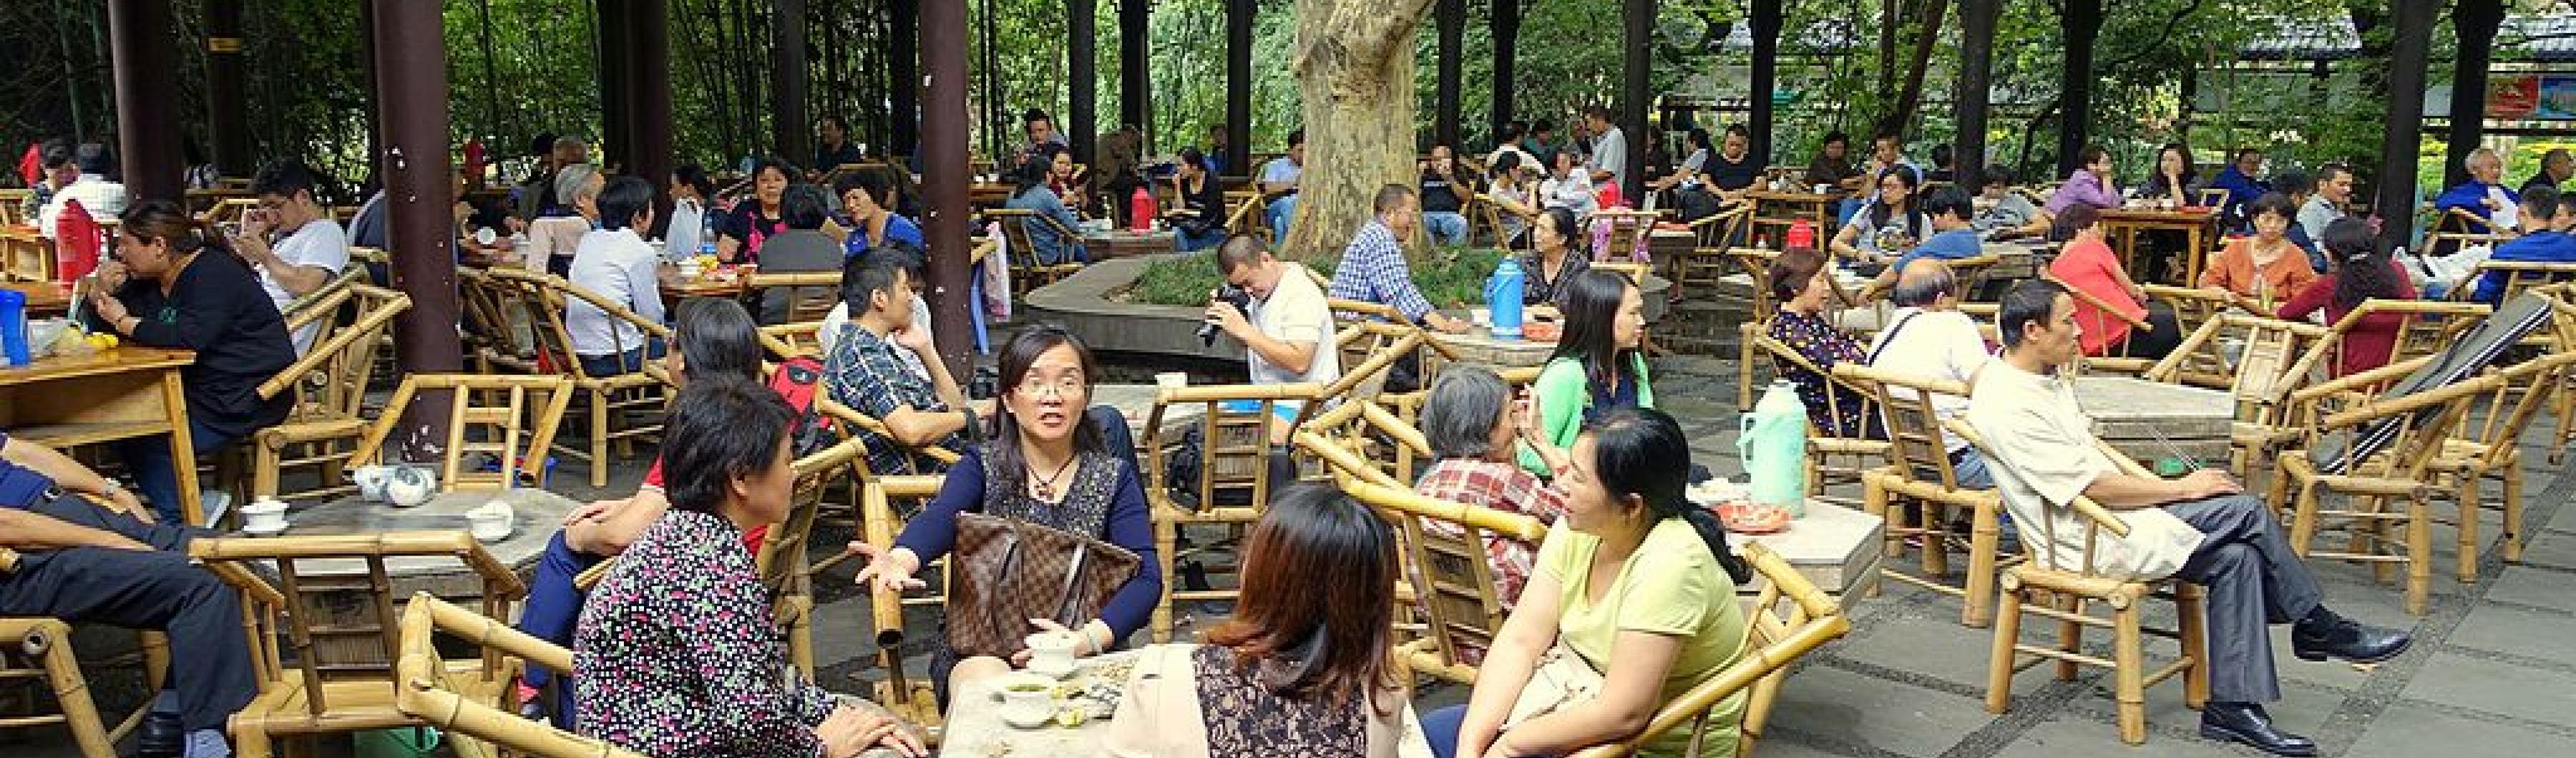 Teahouse Chengdu China Peoples Park